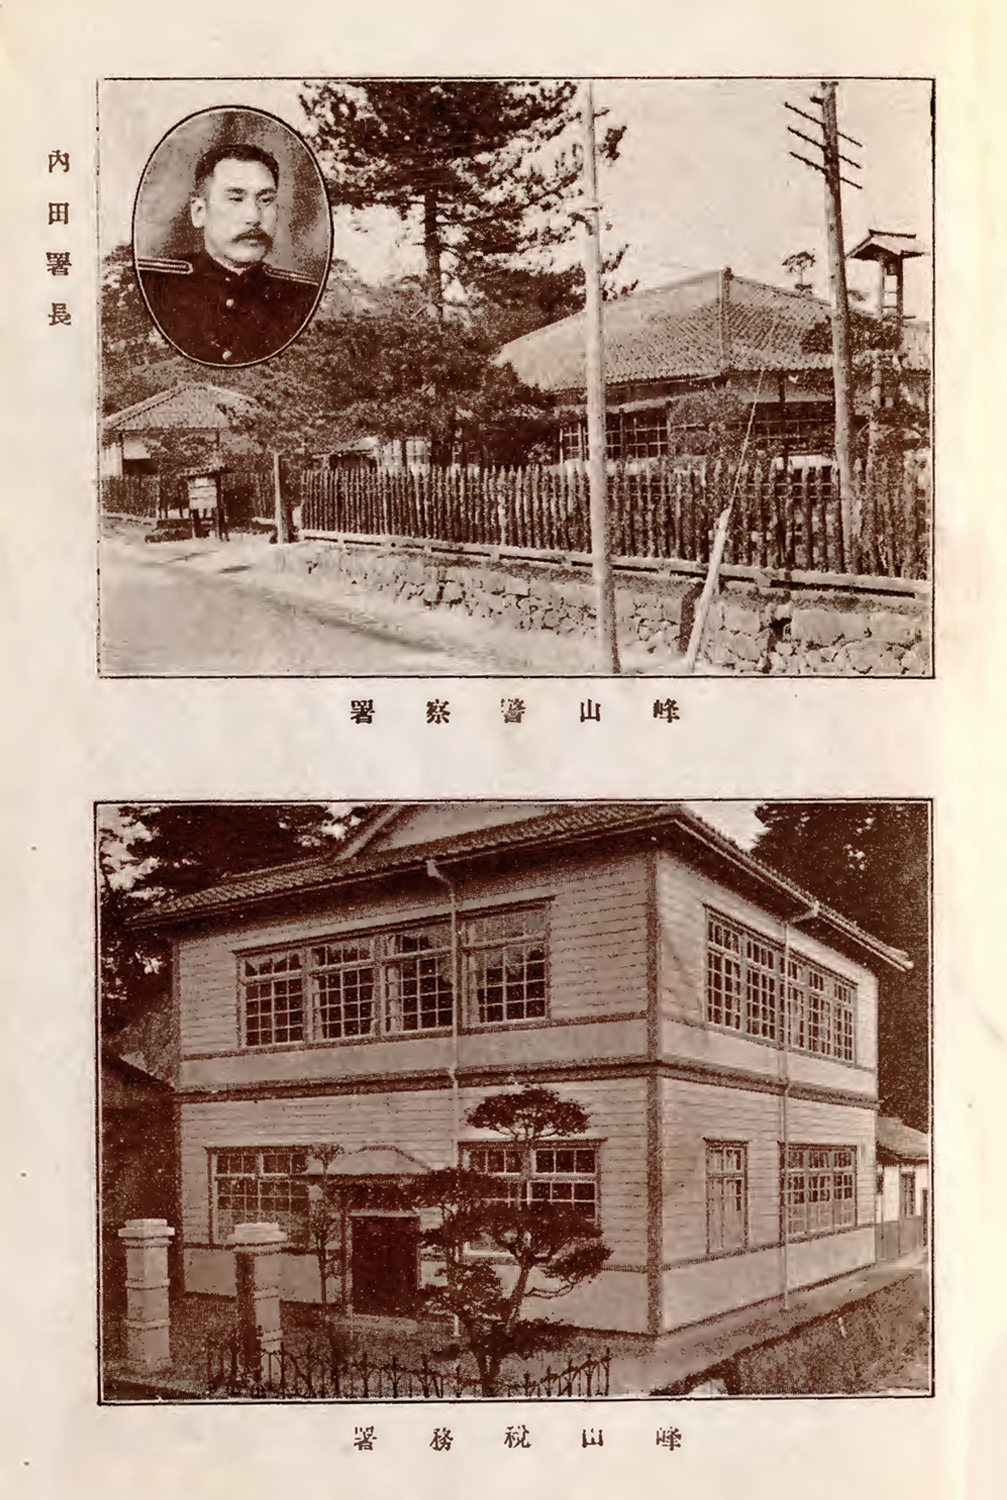 峰山税務署's image 1